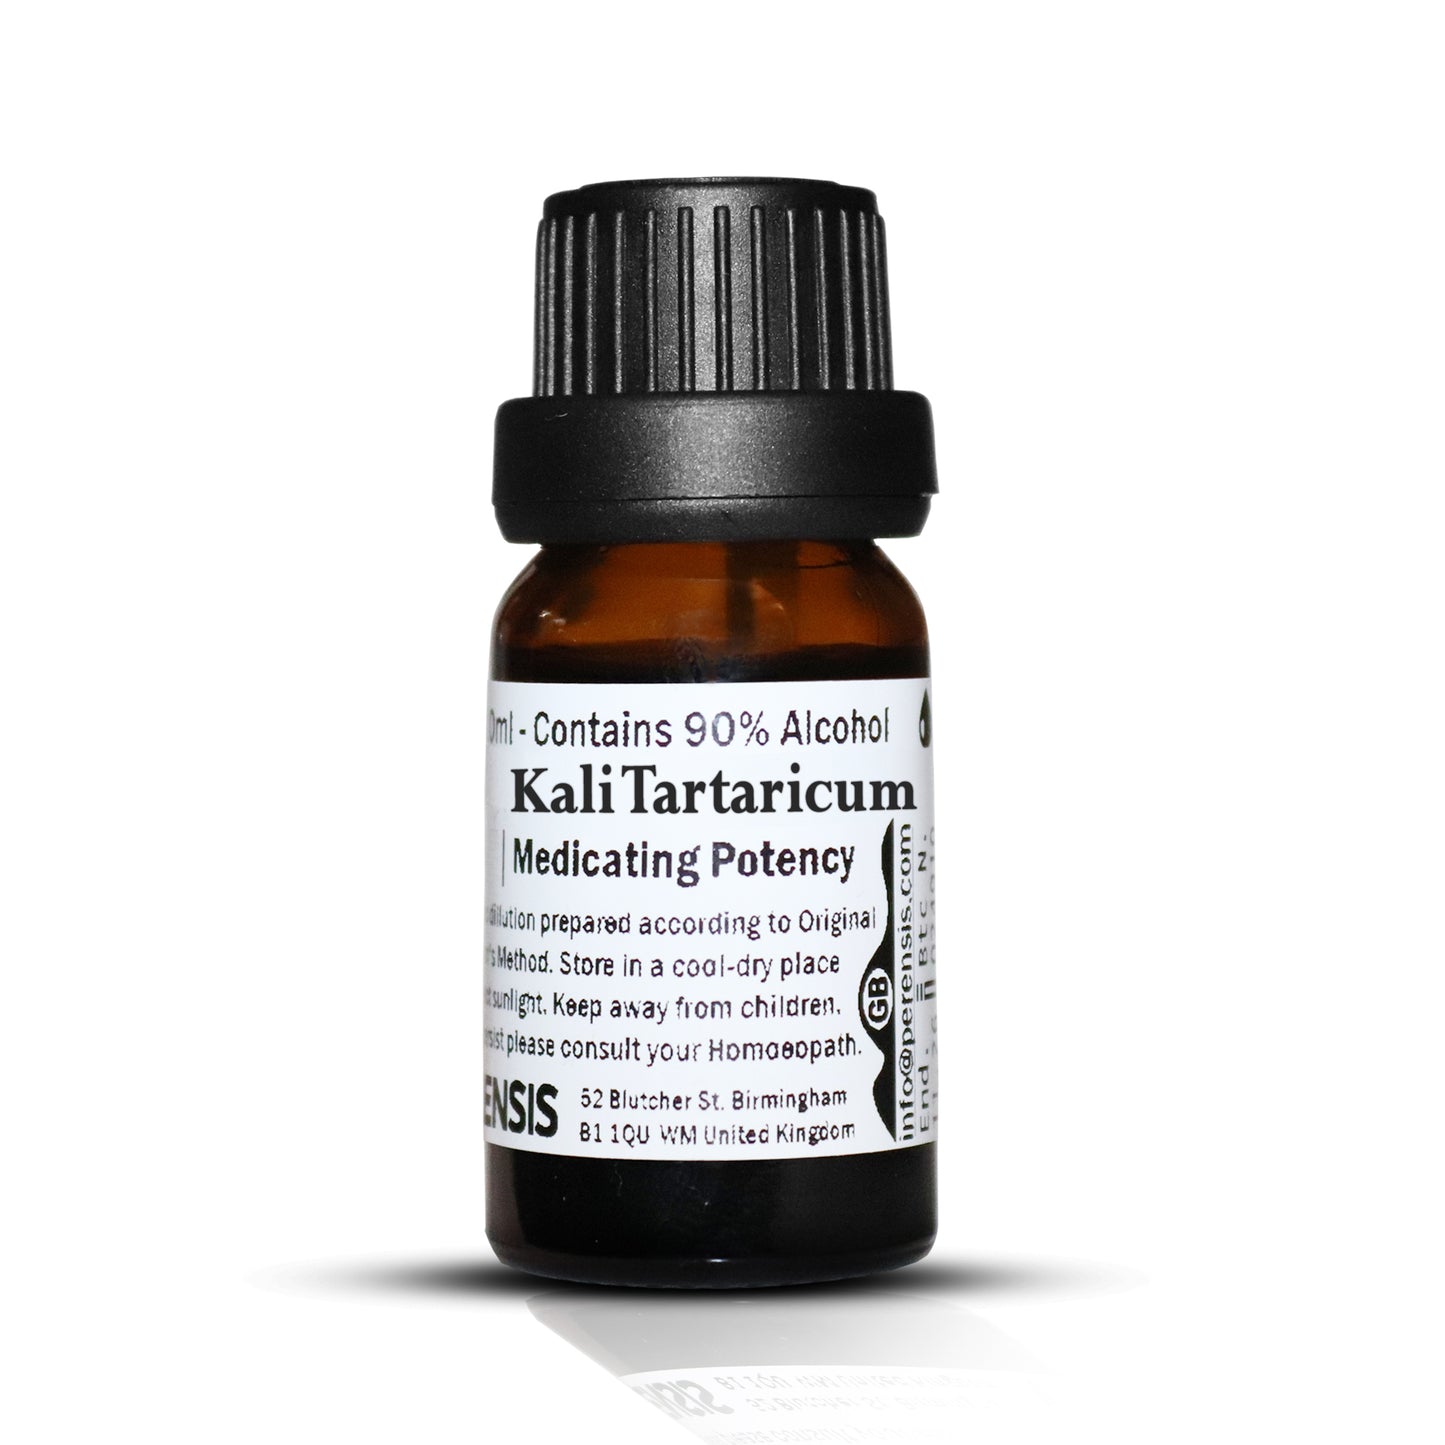 Kali Tartaricum